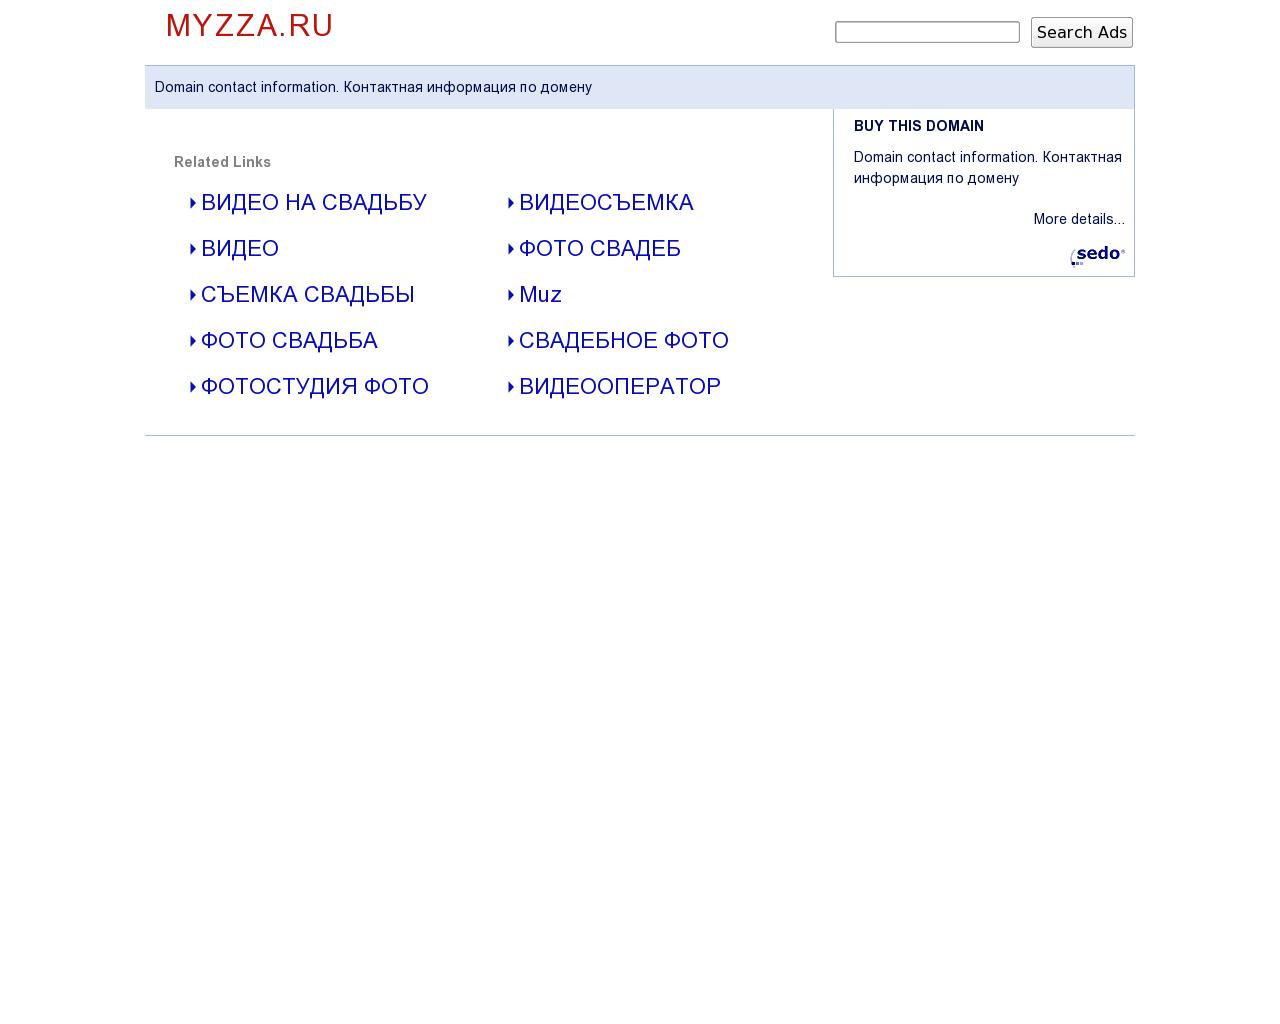 Изображение сайта myzza.ru в разрешении 1280x1024